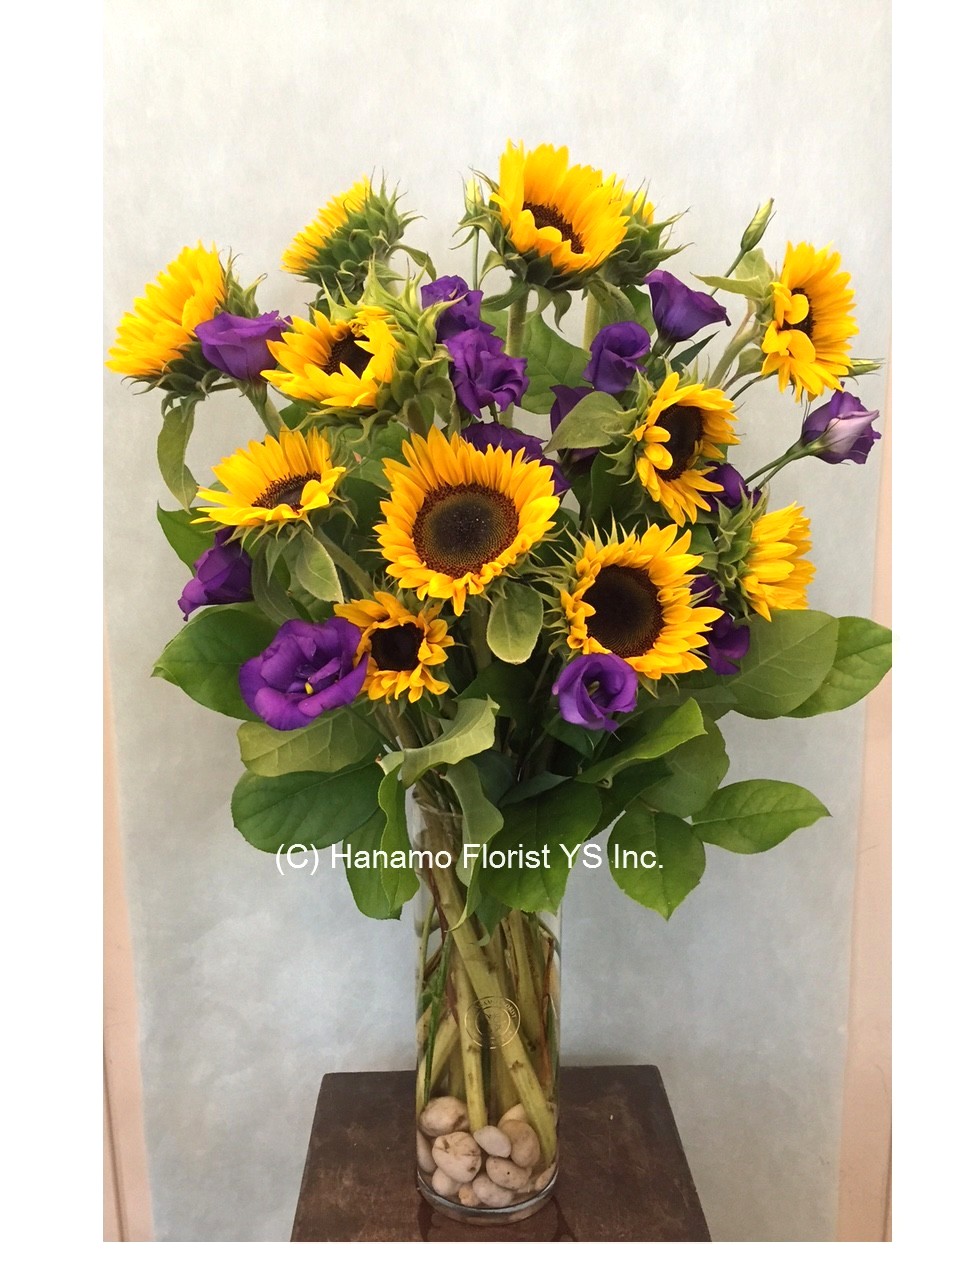 VASE729 Sunflowers & Seasonal Flowers in a Tall Vase